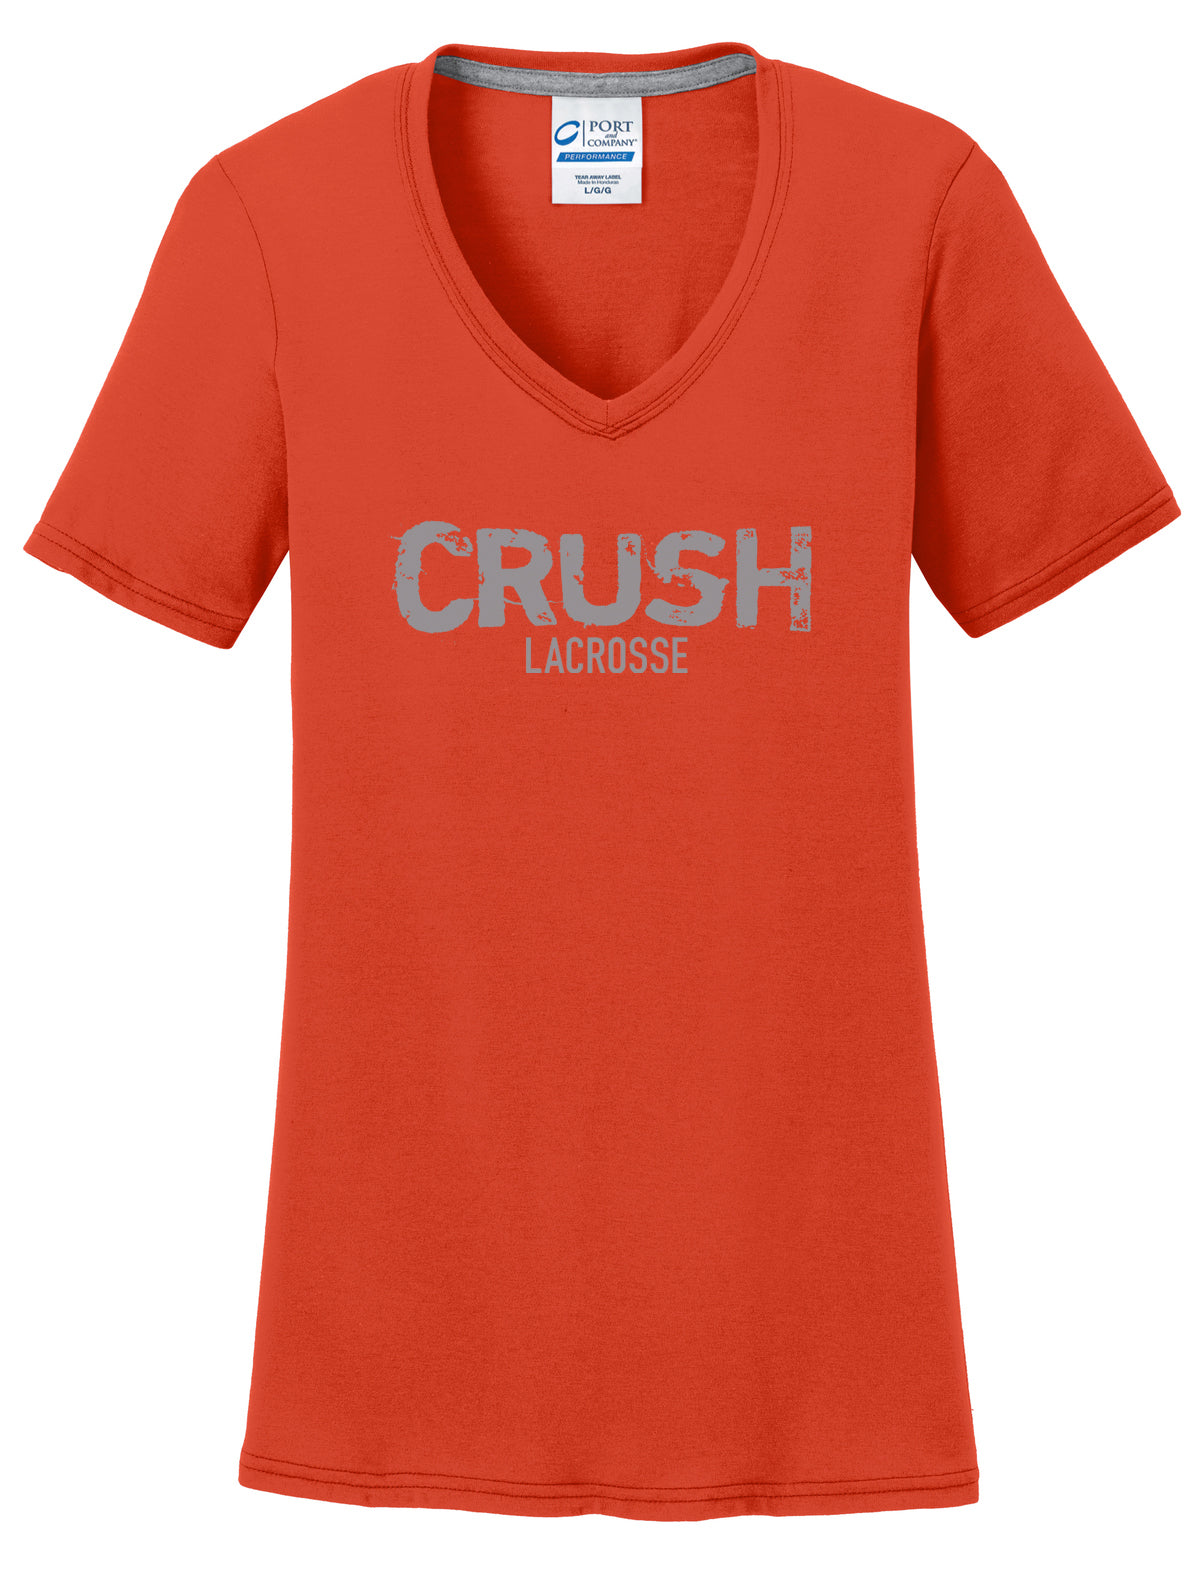 Crush Lacrosse Women's Orange T-Shirt